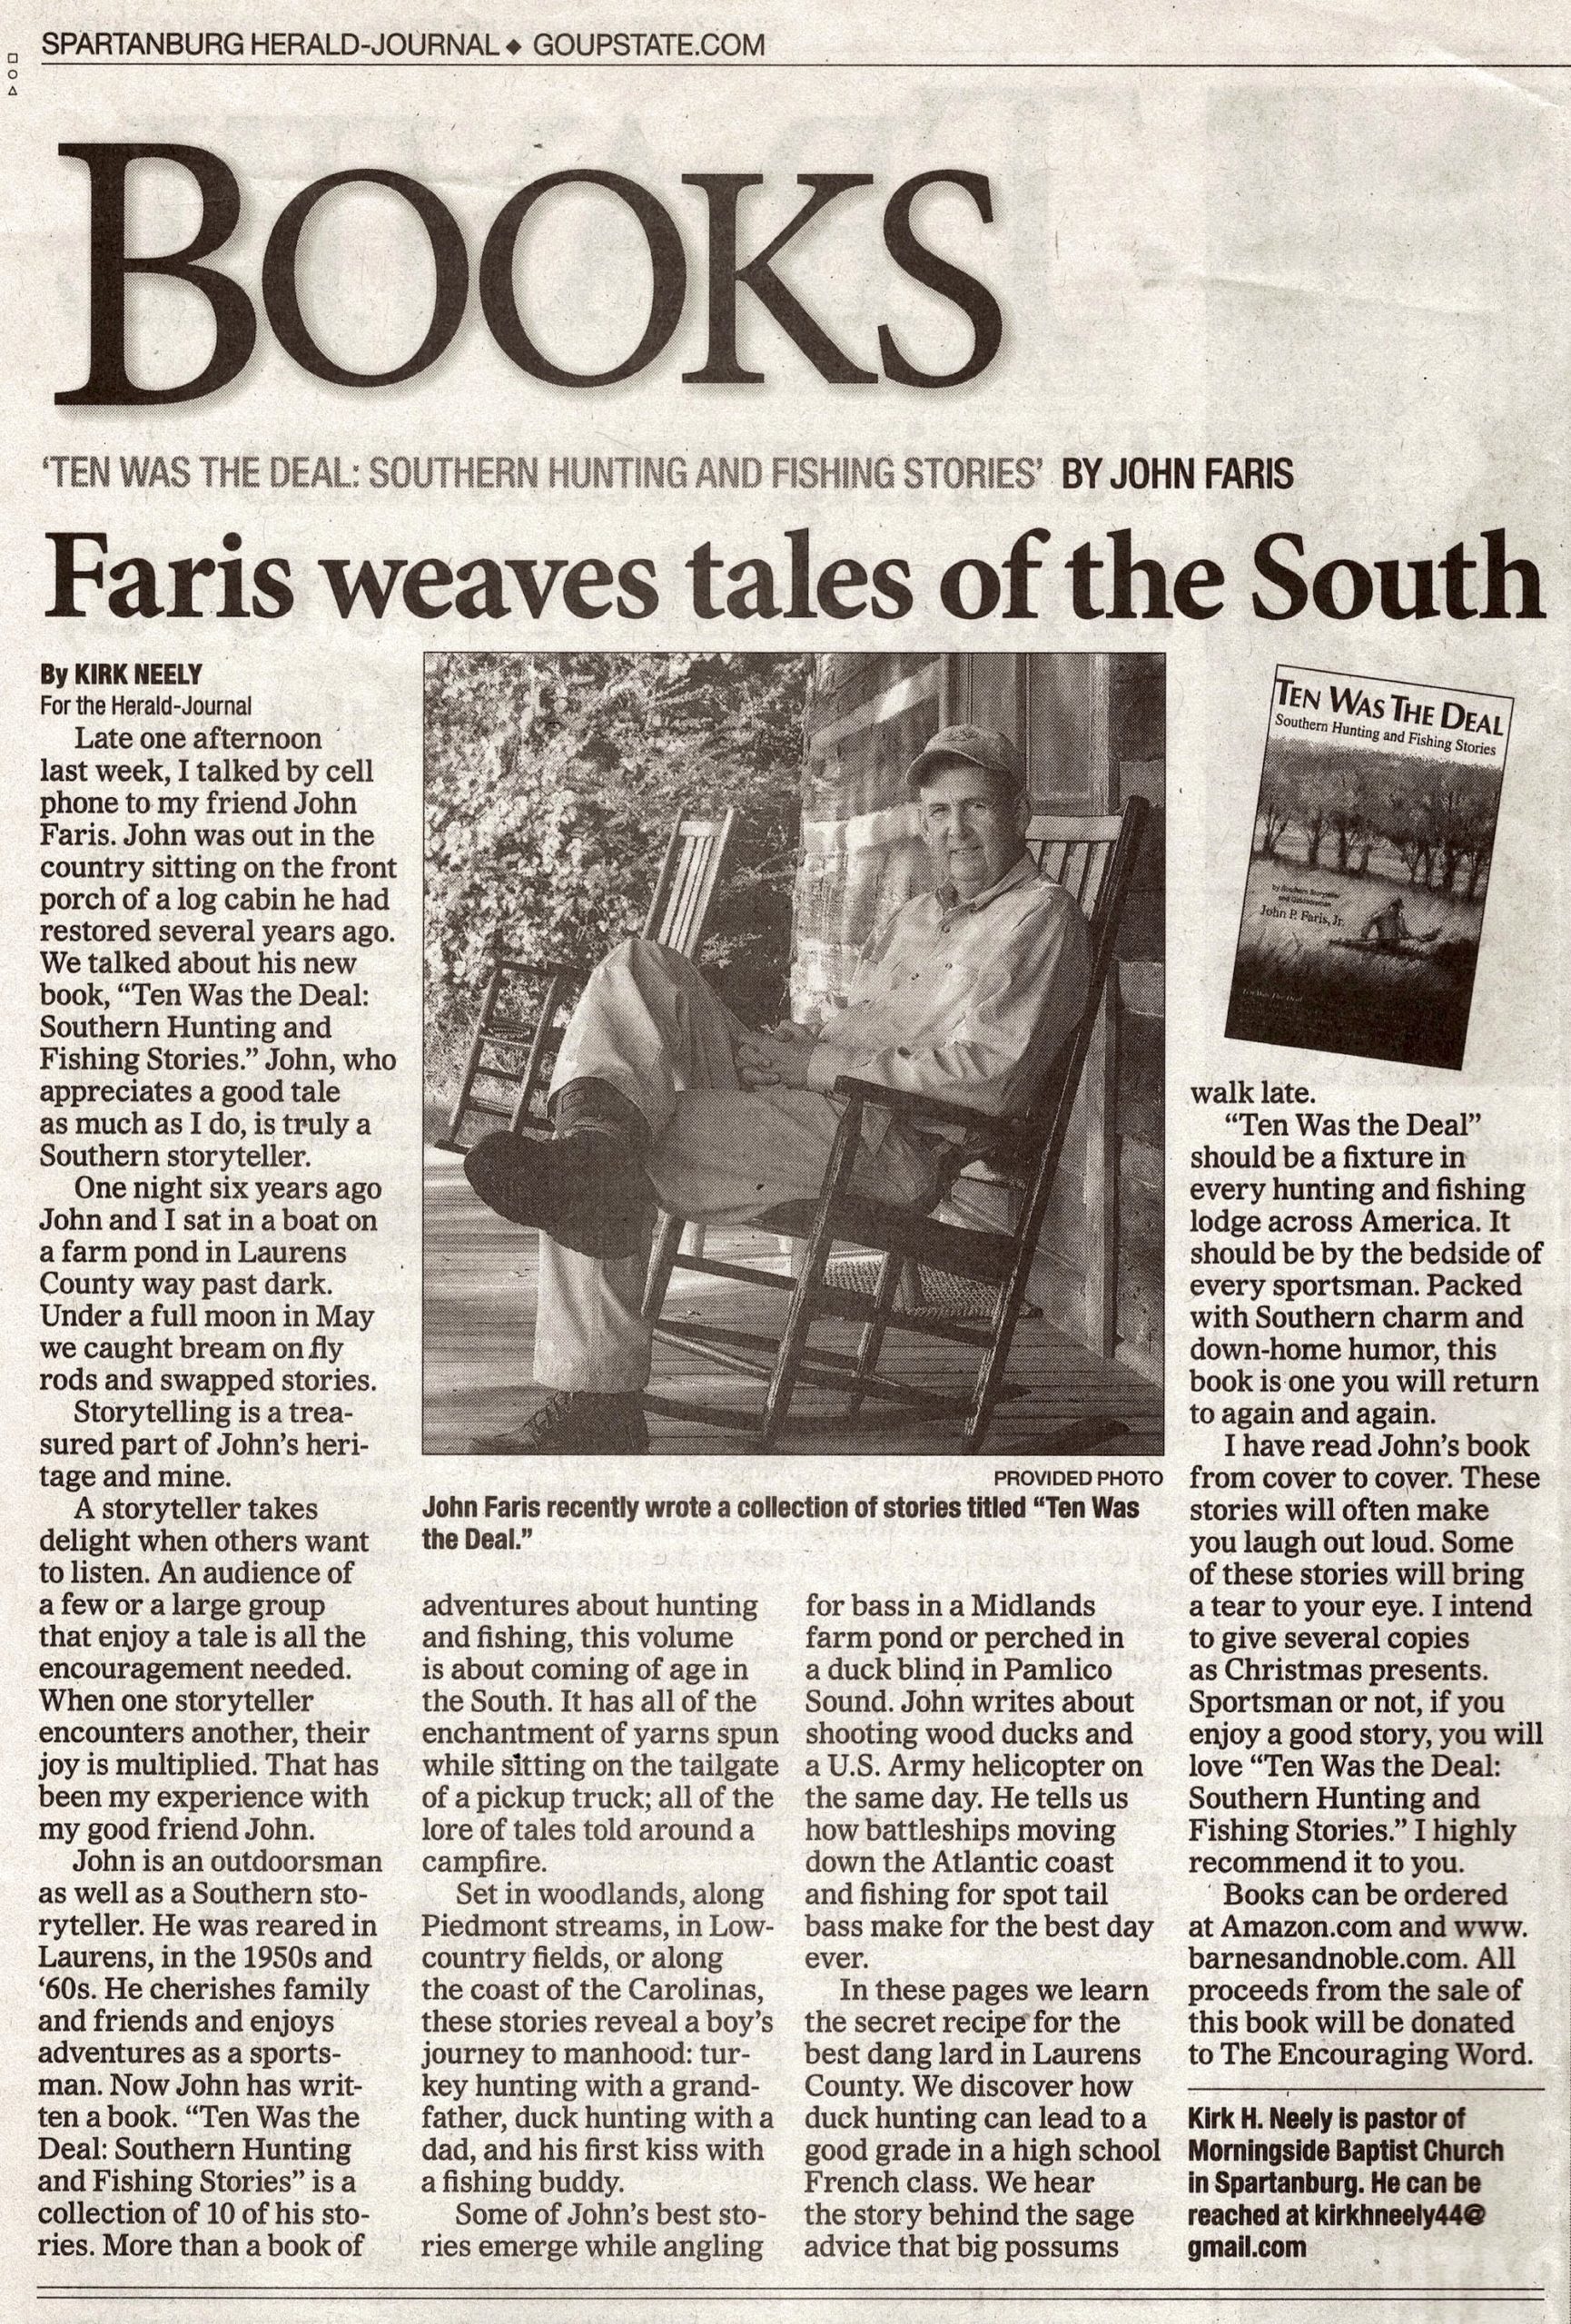 Newspaper article clipping of Southern Storyteller John P. Faris, Jr.